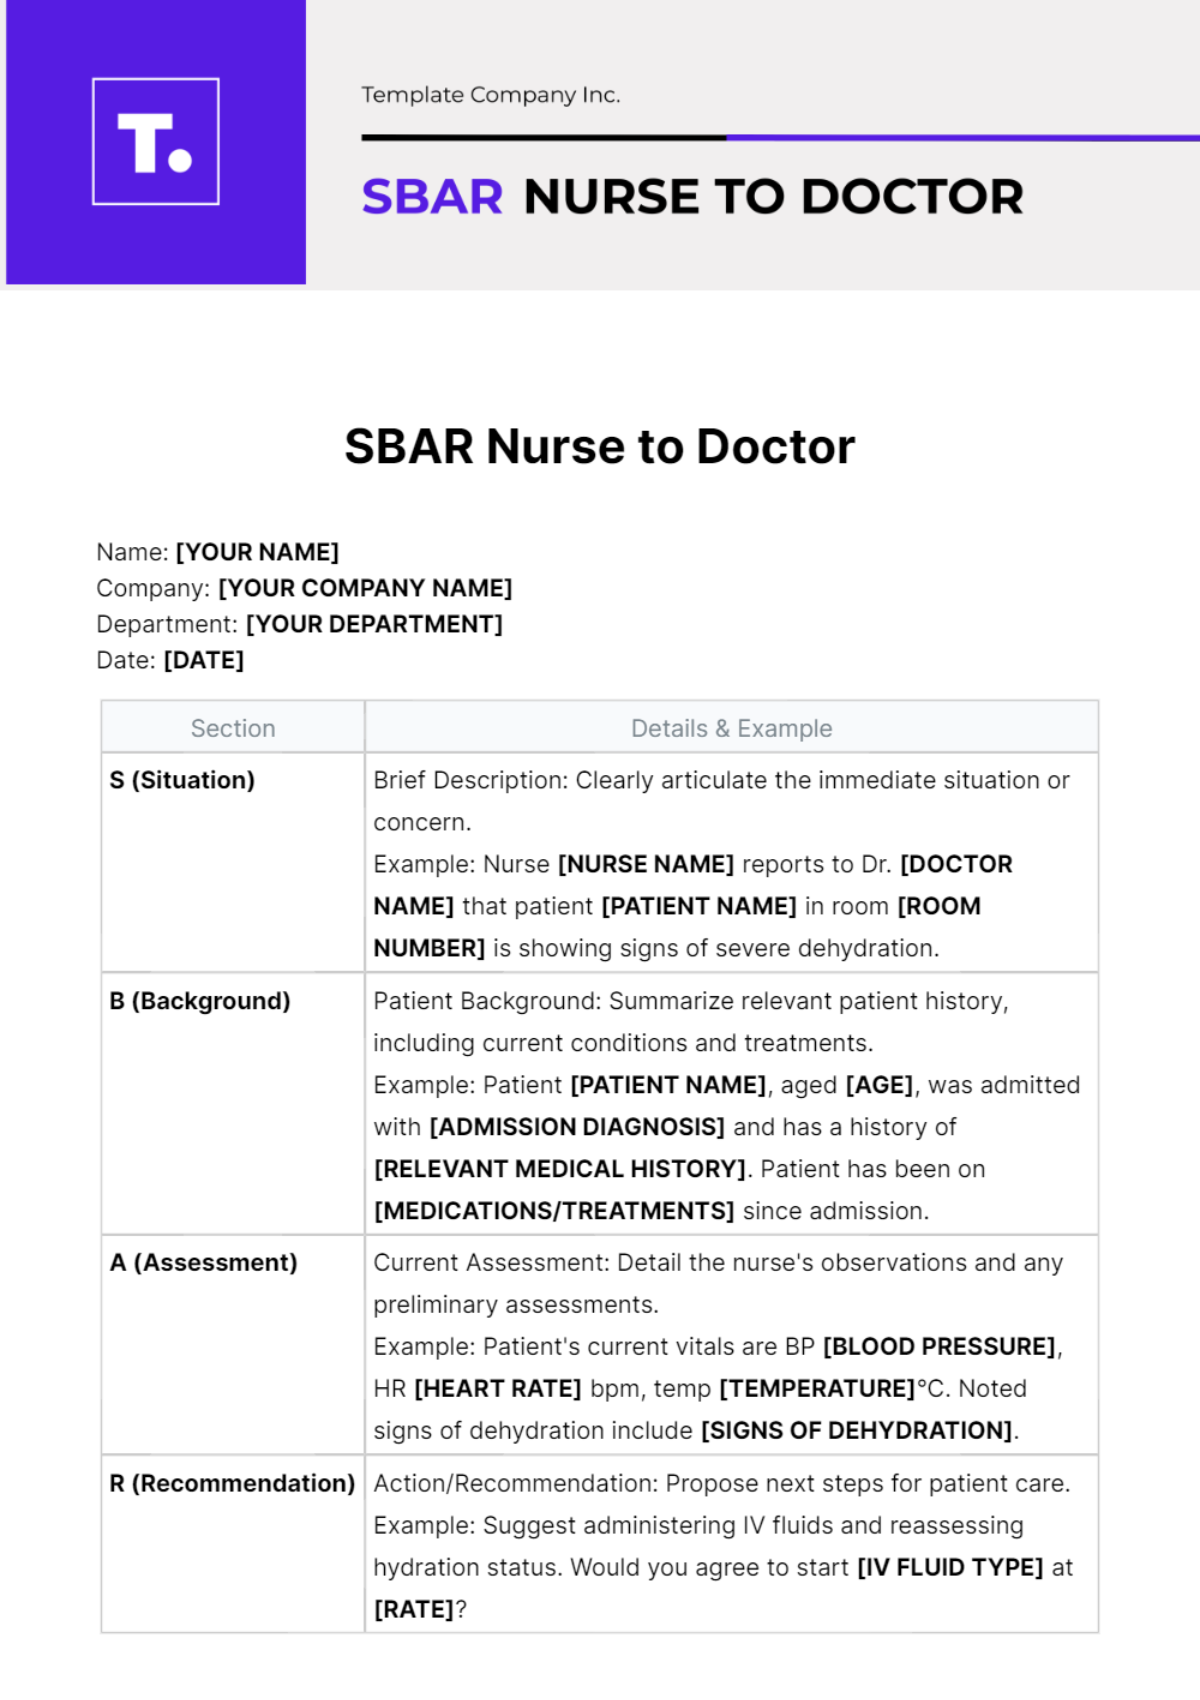 Free SBAR Nurse to Doctor Template